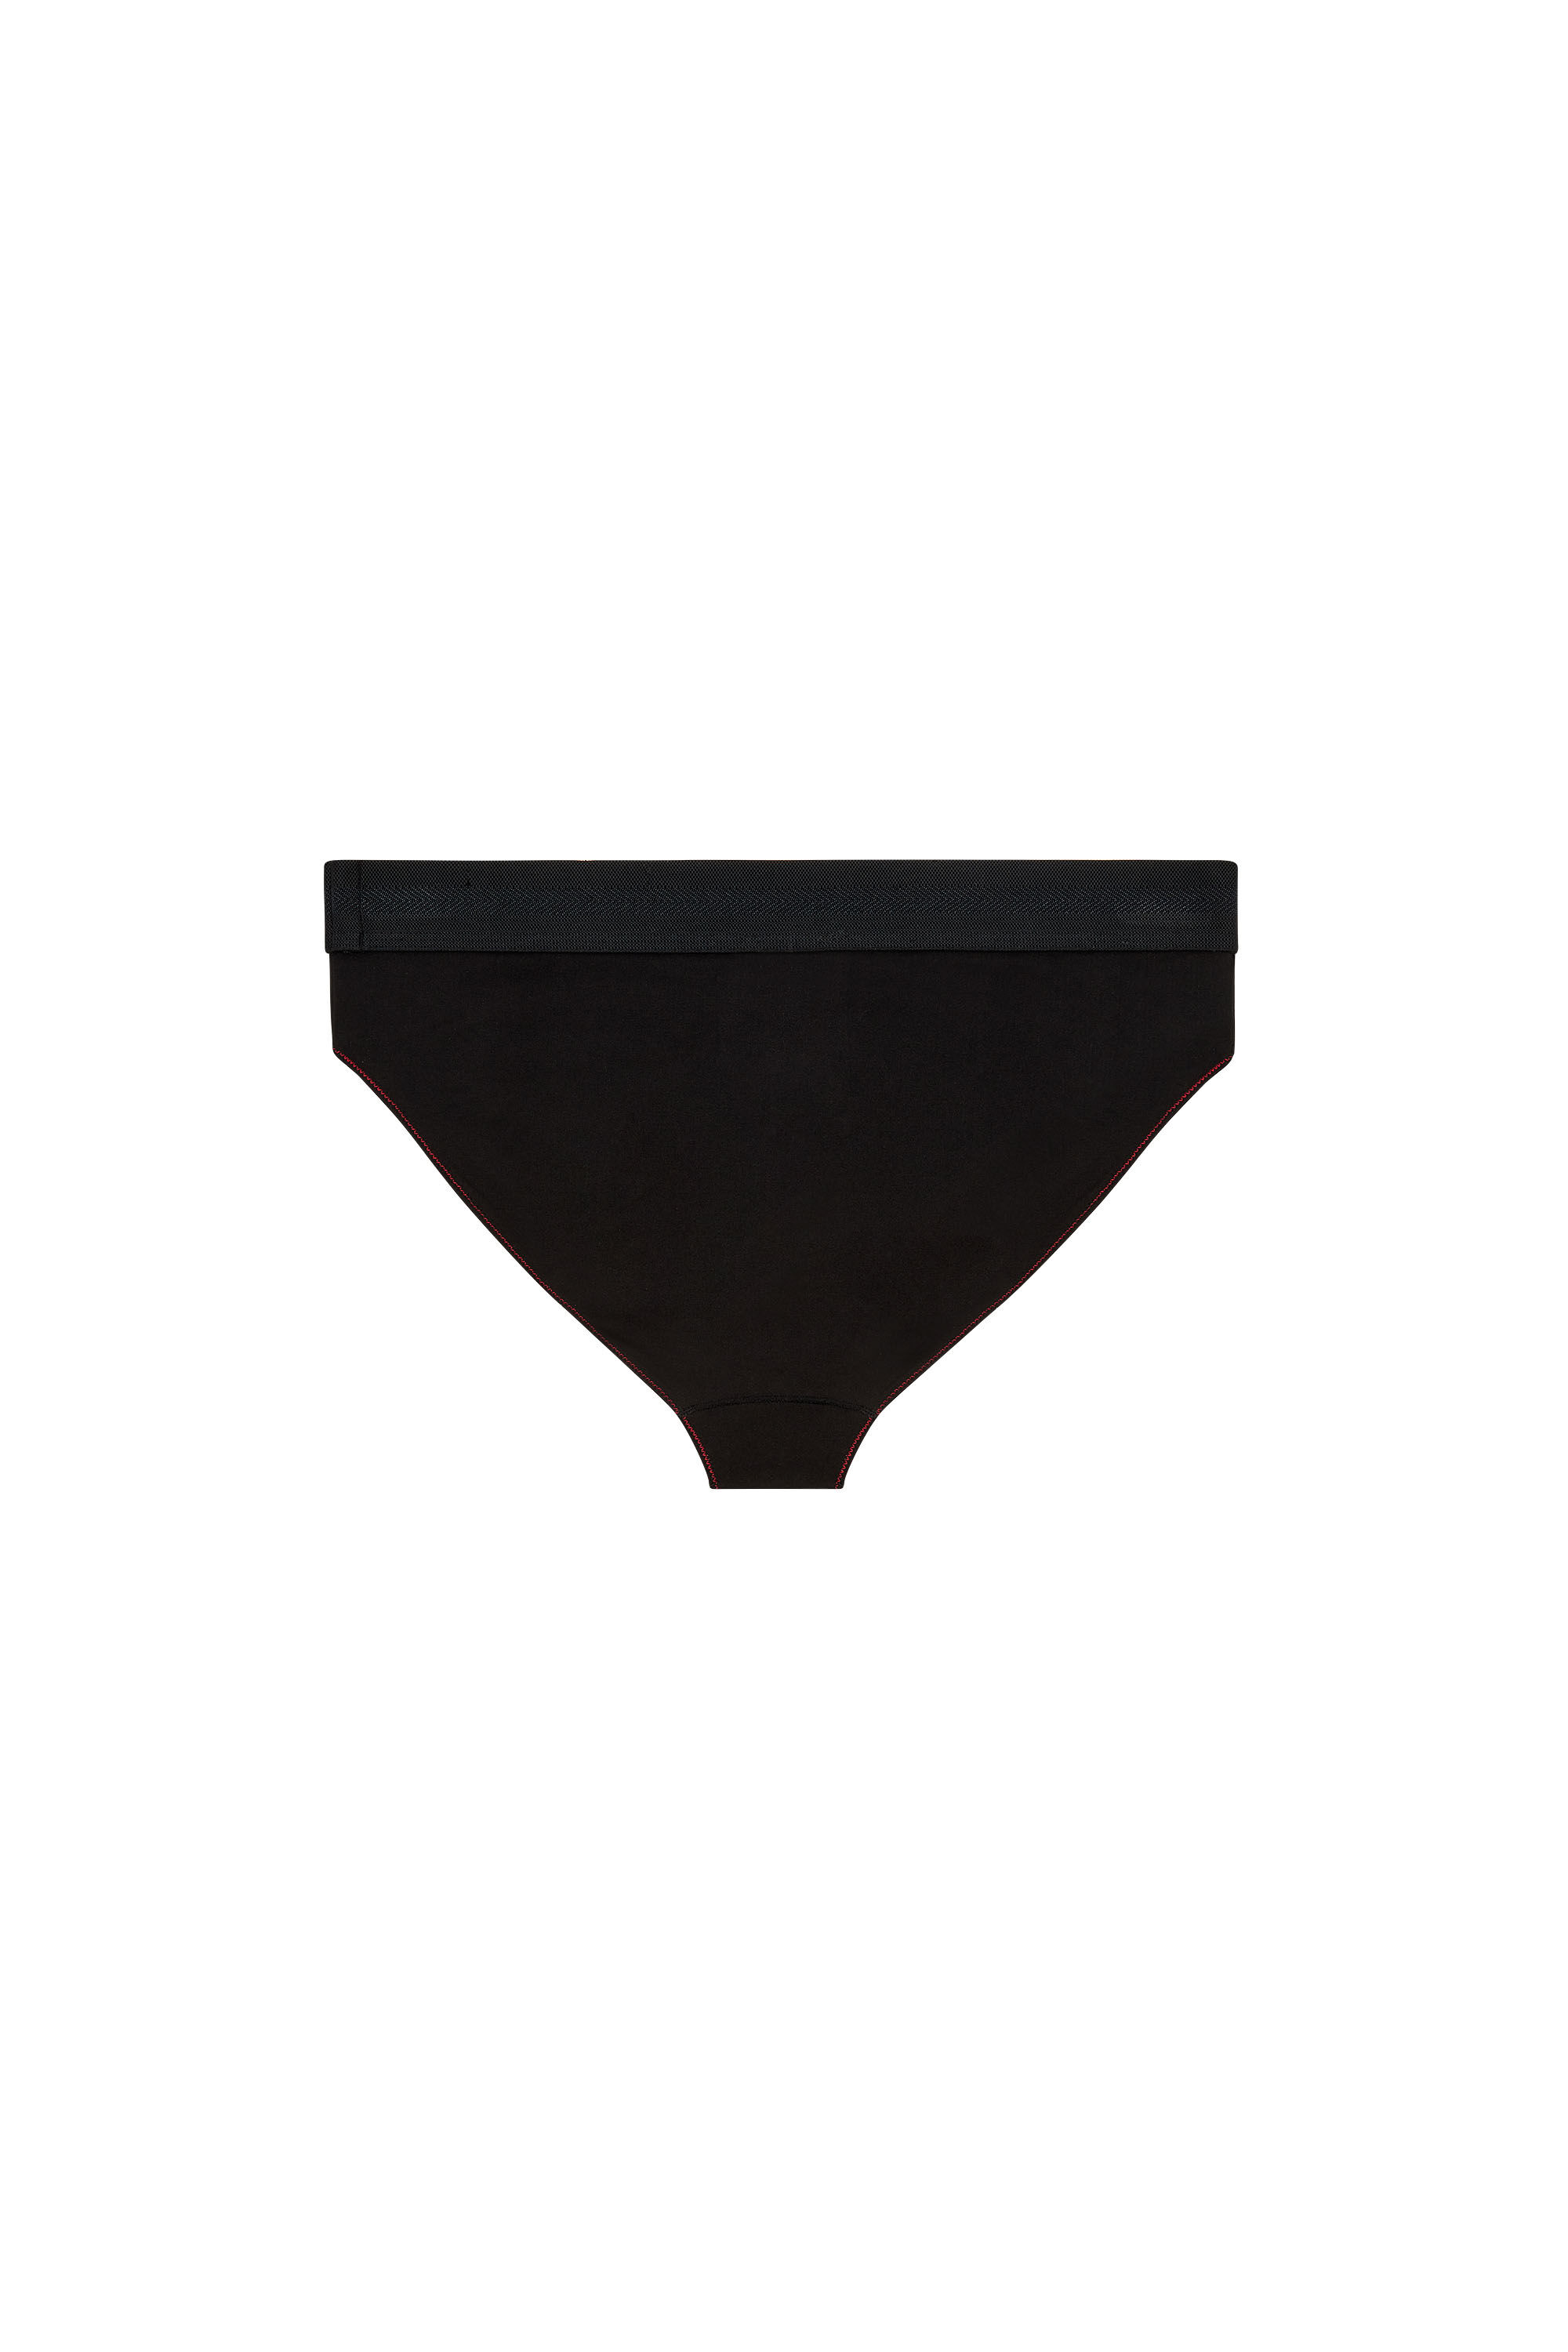 GDXFSM Women Lingerie Underwear Knickers Briefs Women Nylon